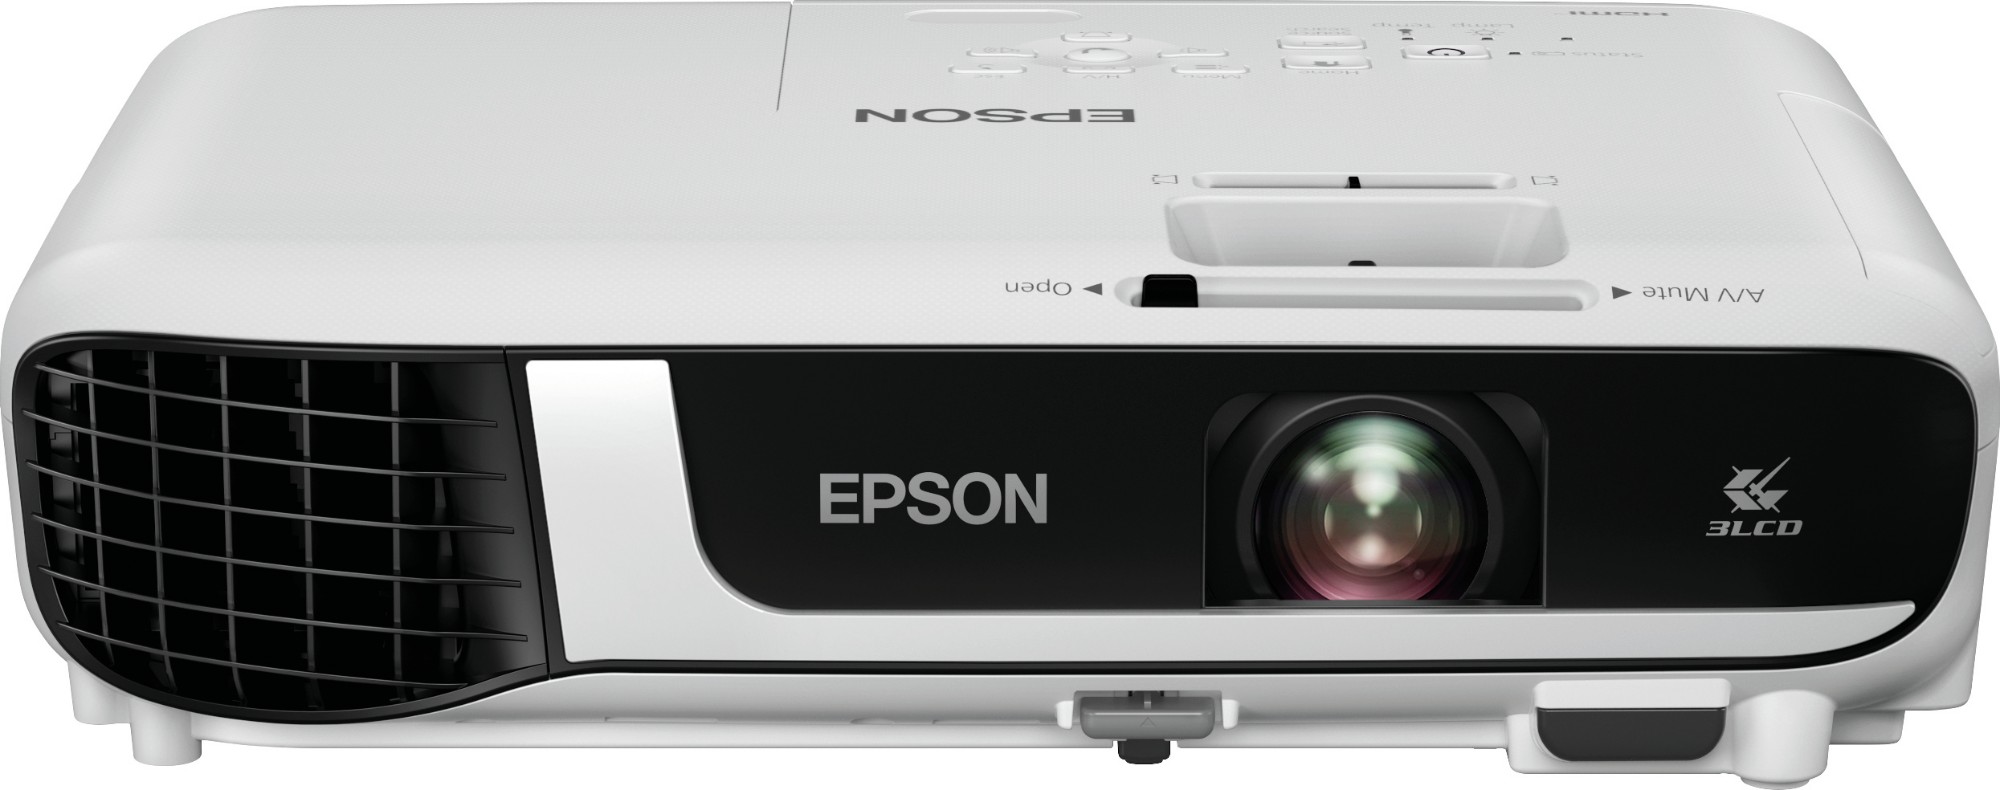 epson hd projector